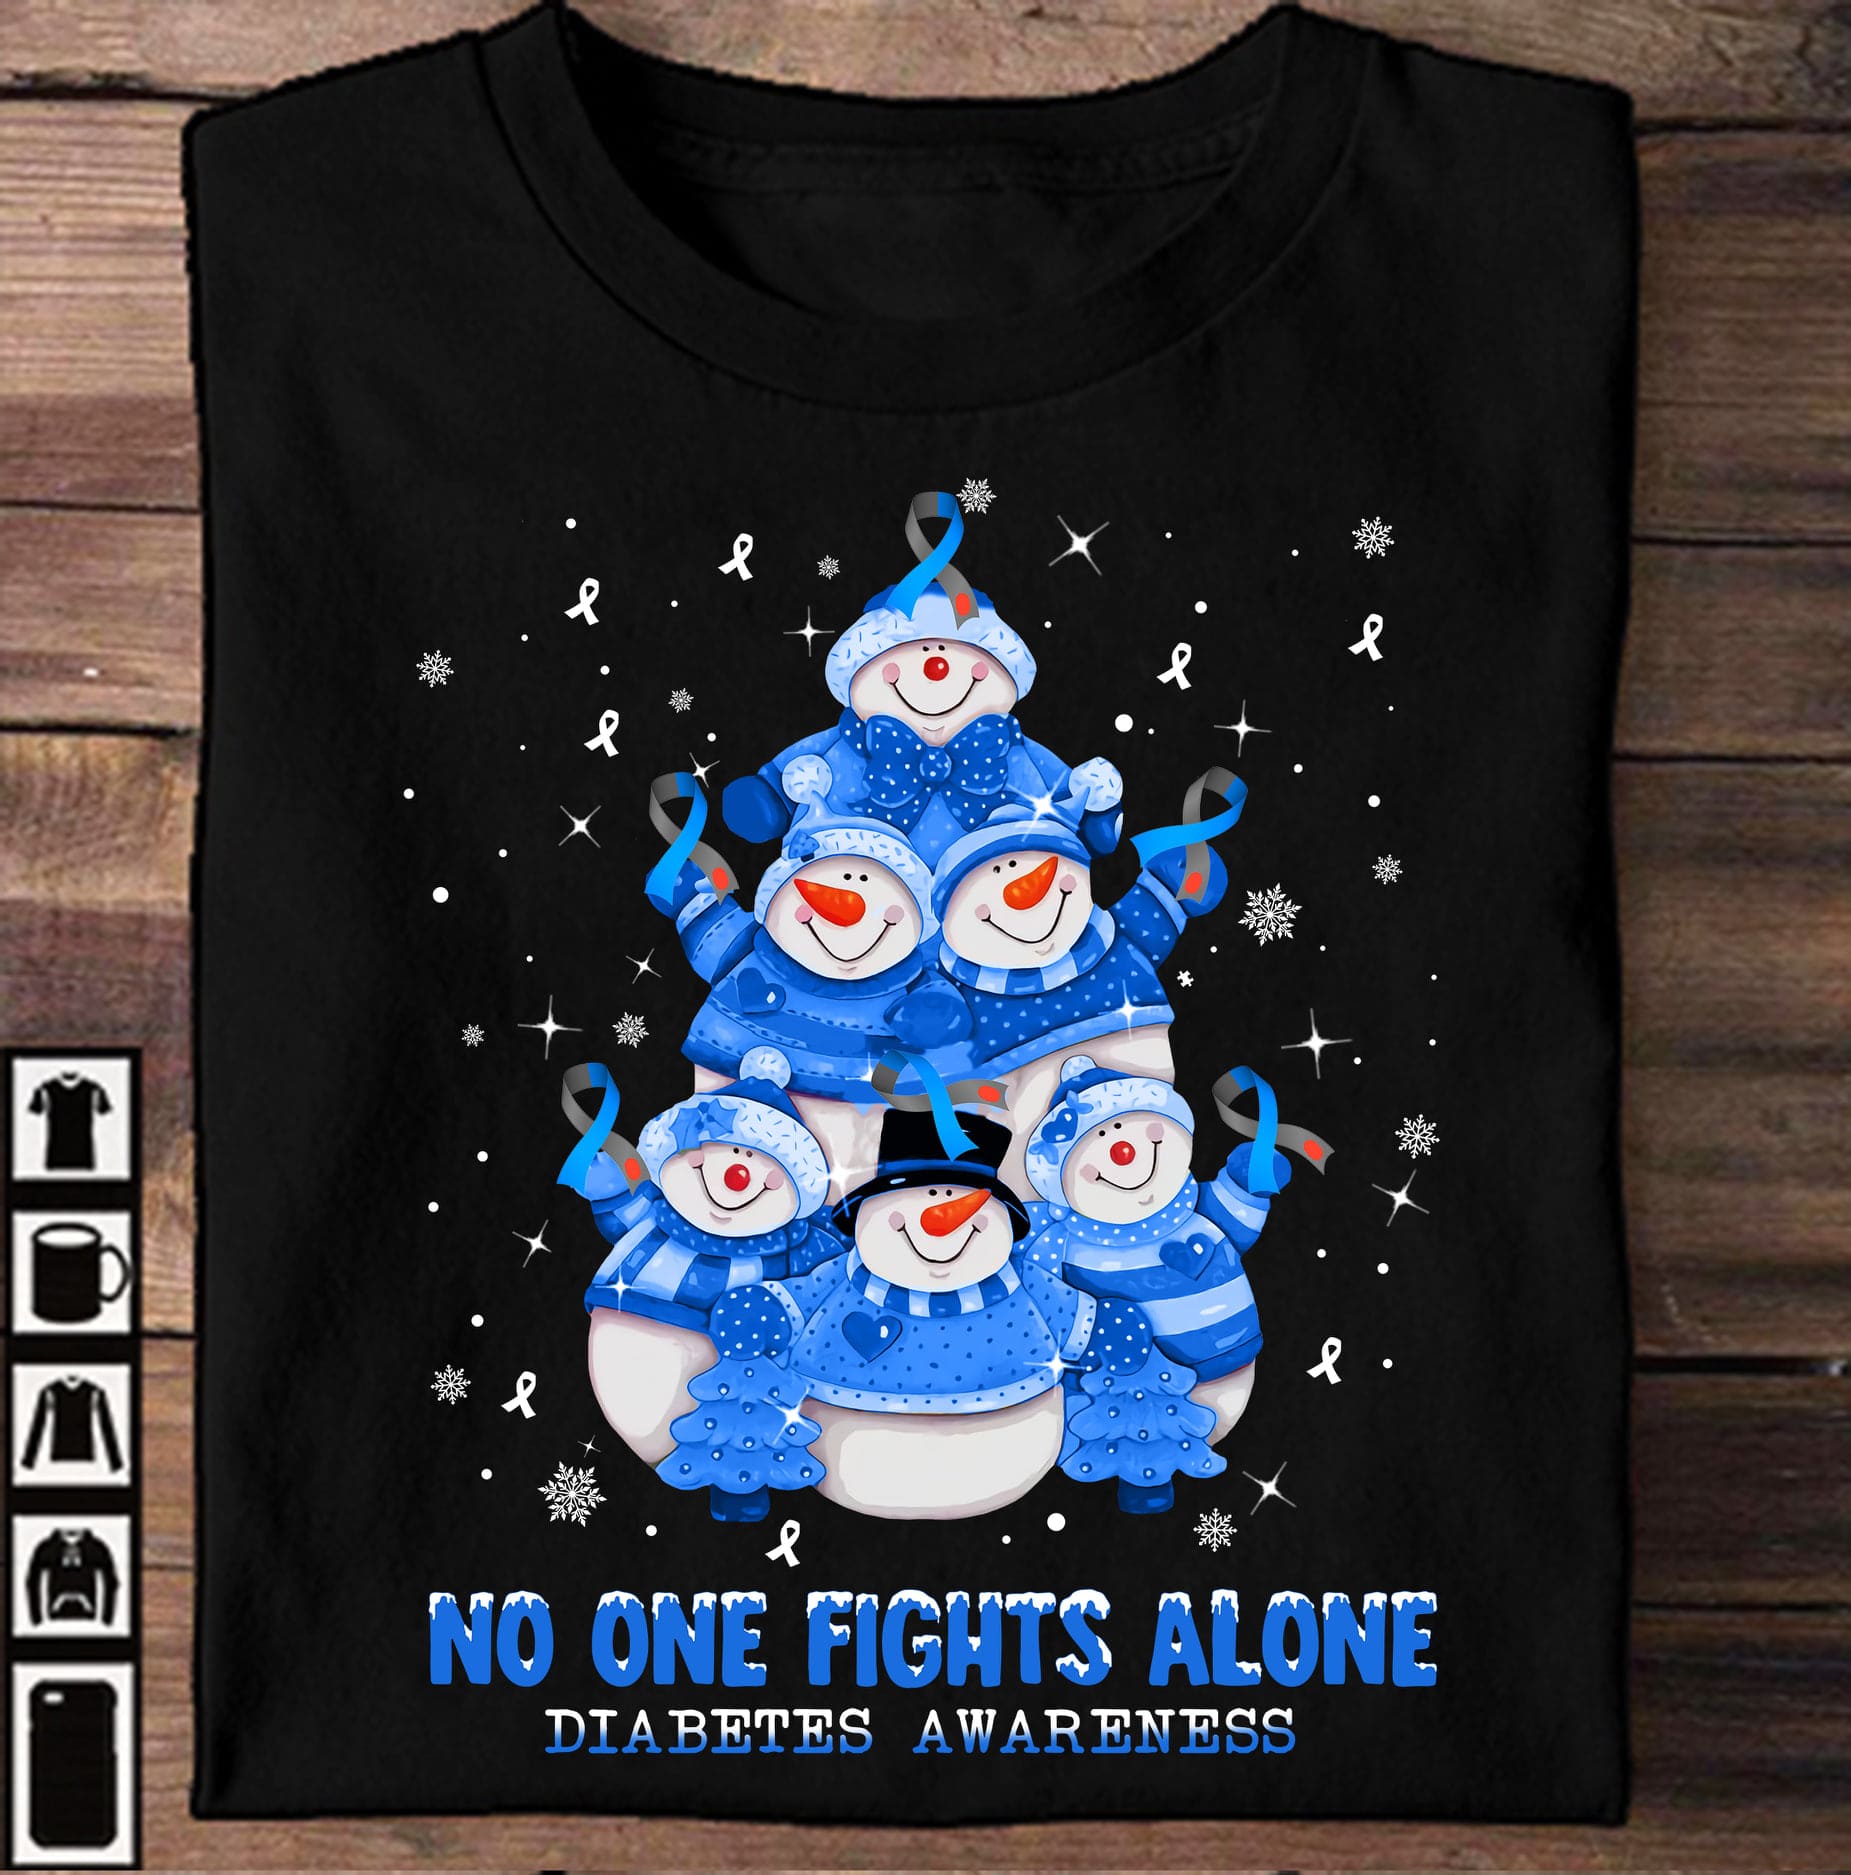 No one fights alone - Diabetes awareness, Diabetes christmas snowman